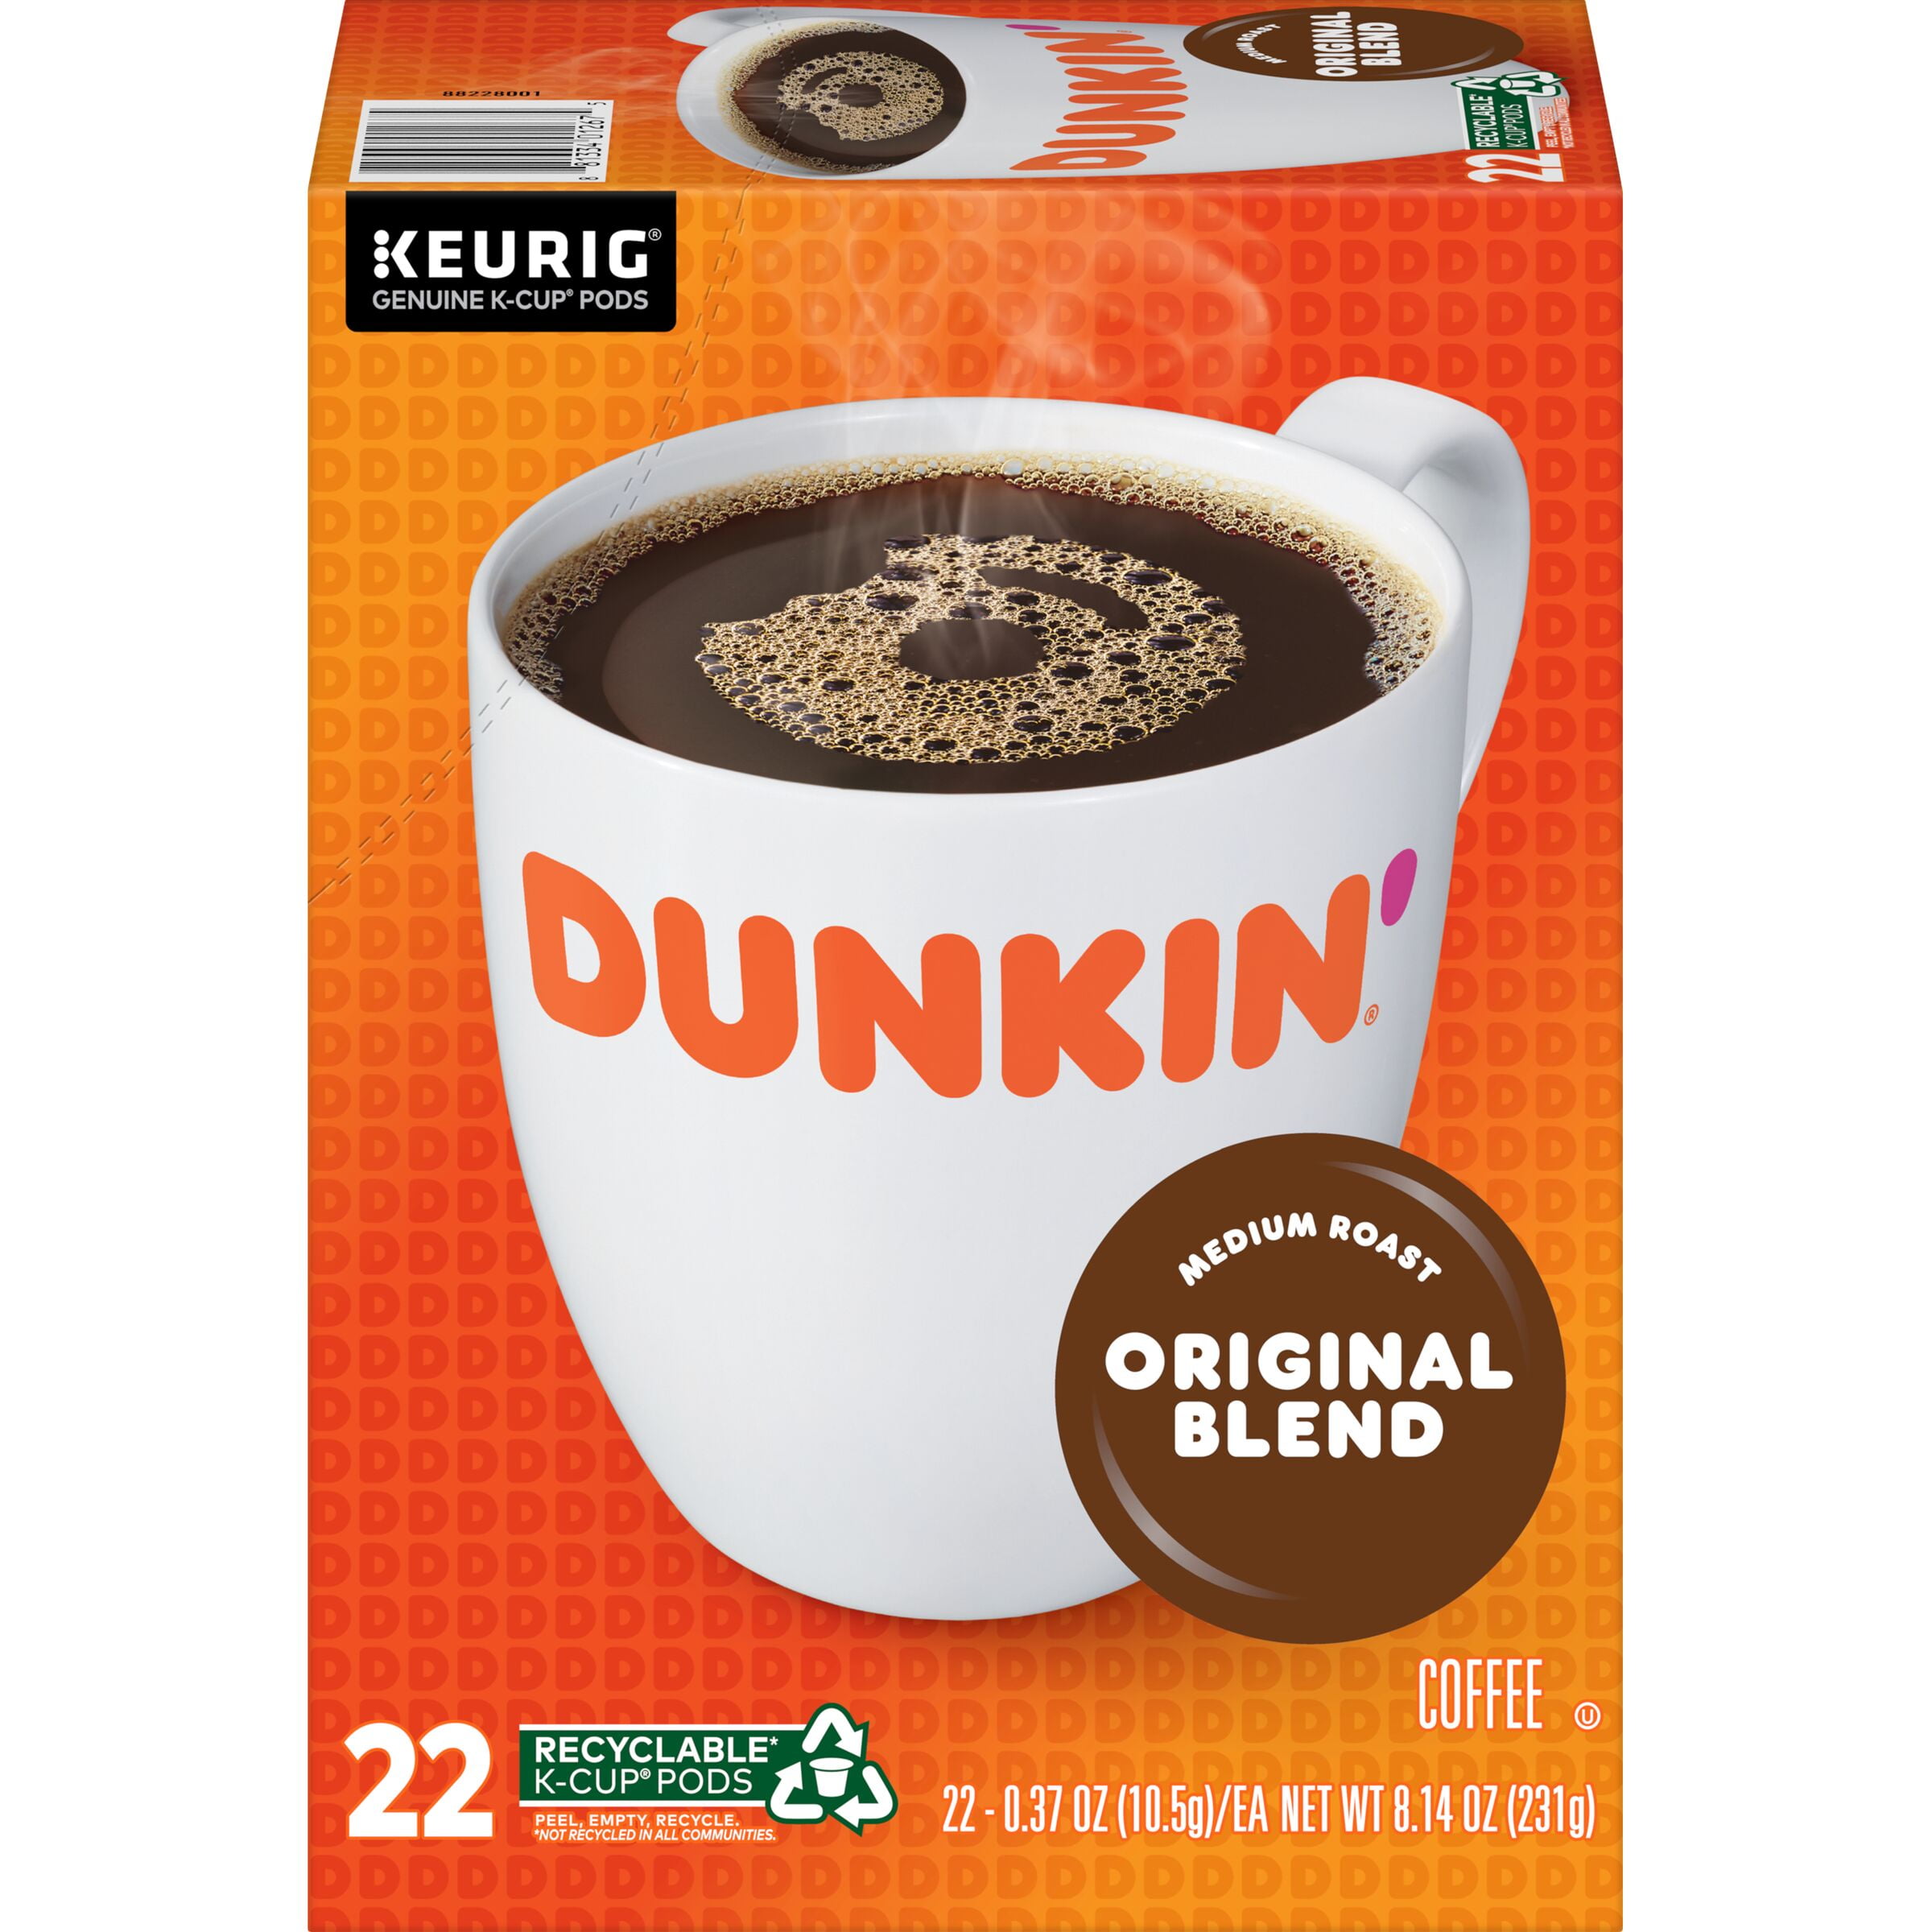 Photo 1 of Dunkin' Original Blend, Medium Roast, Keurig K-Cup Pods - 22ct
BB 04 23 2022